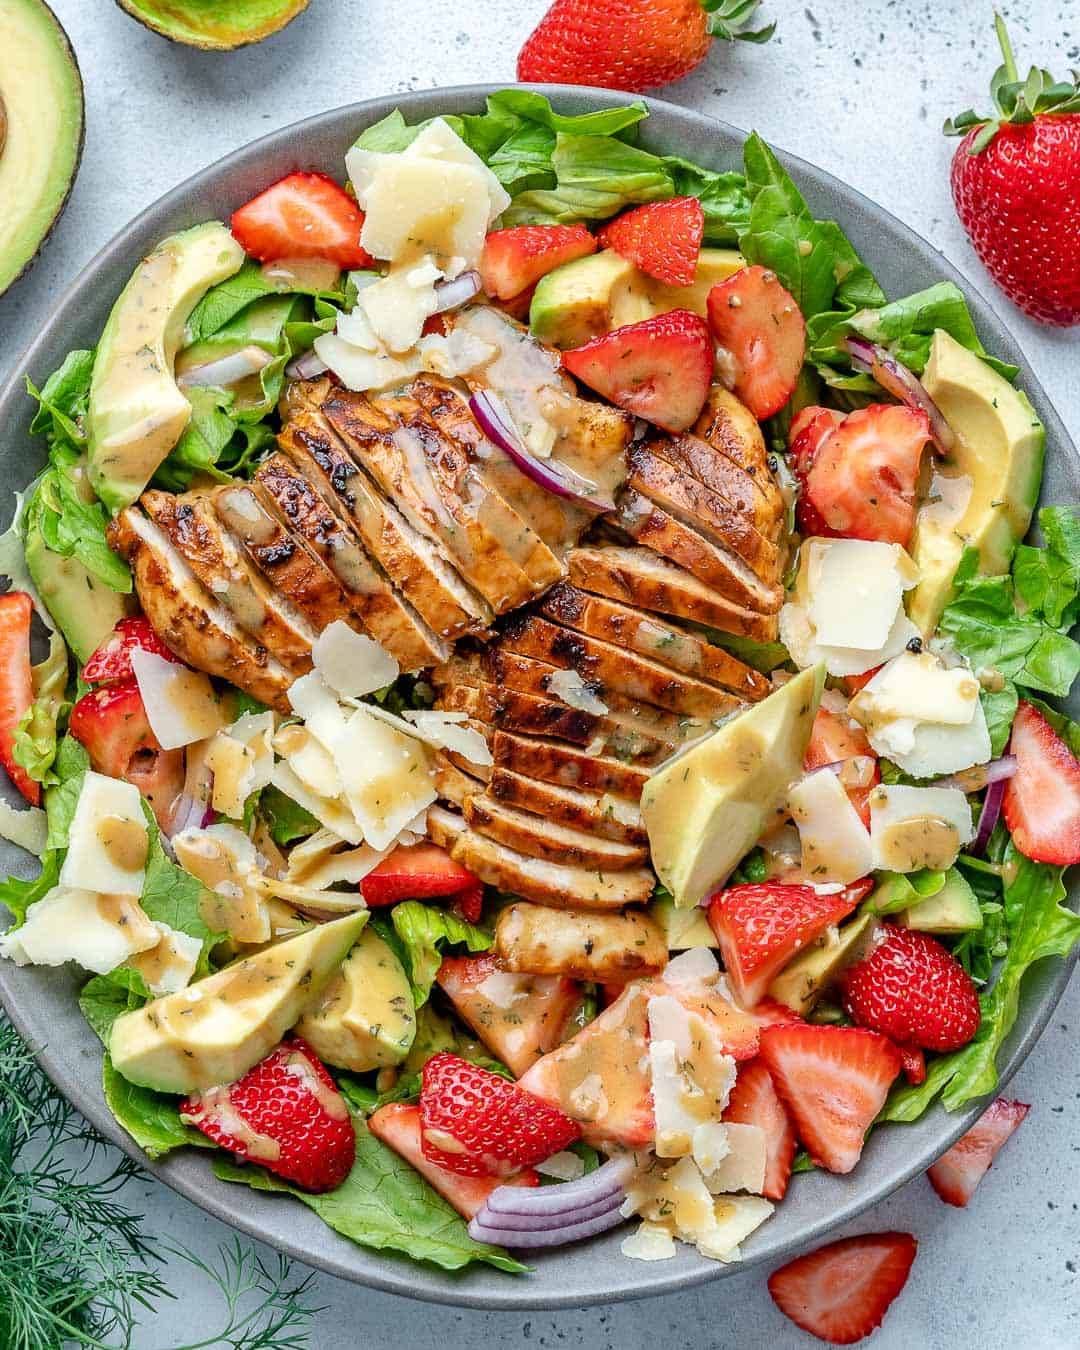 ETI Healthy Choice Meals: Strawberry Chicken Salad